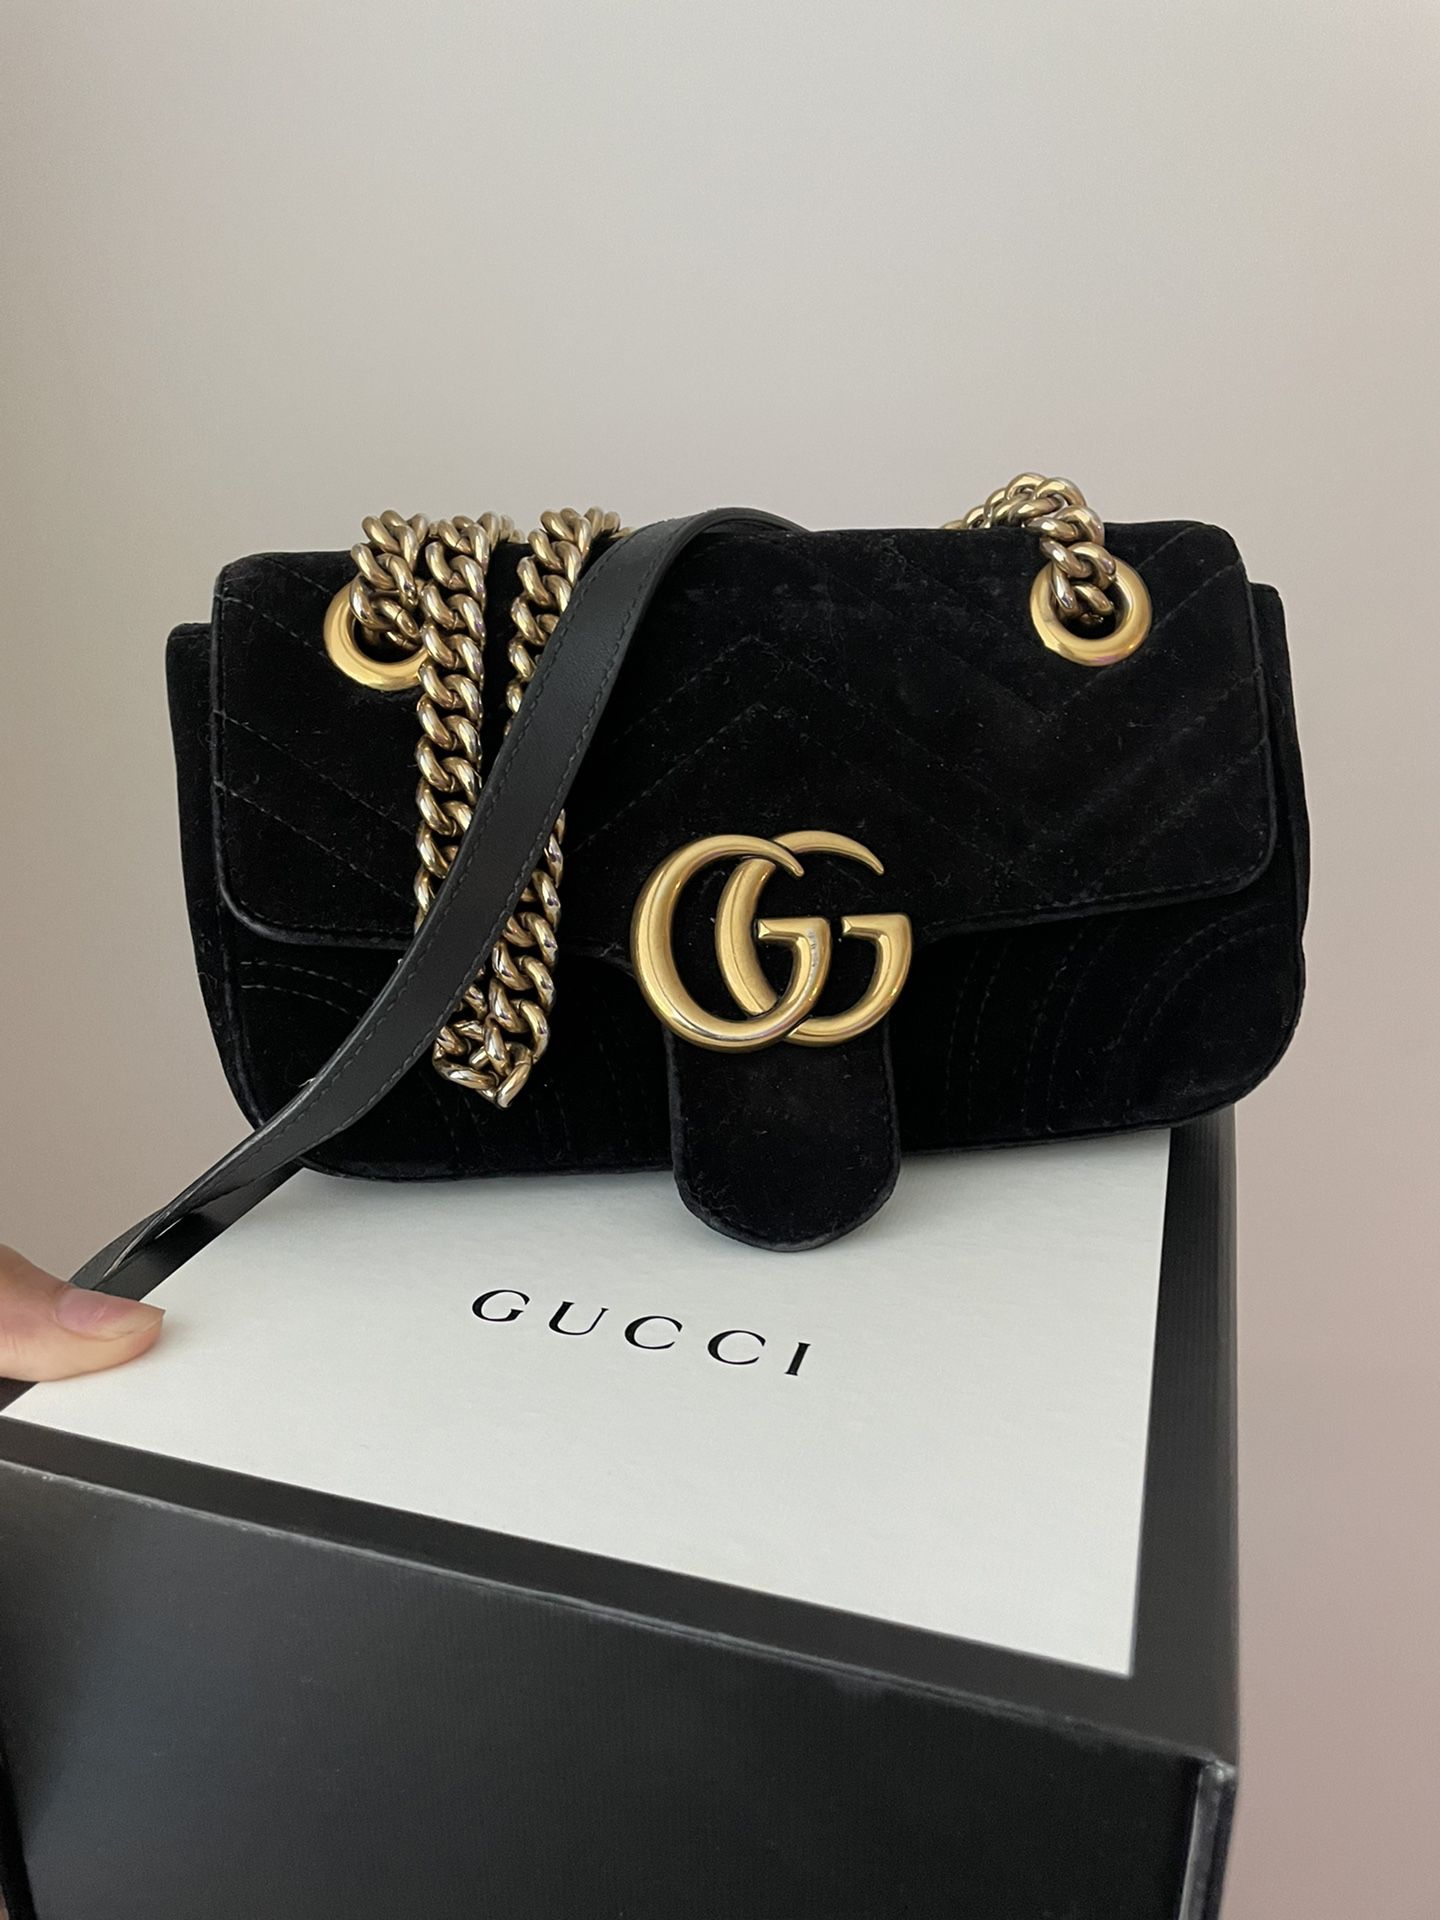 Authentic Gucci Marmont Purse for Sale in Phoenix, AZ - OfferUp